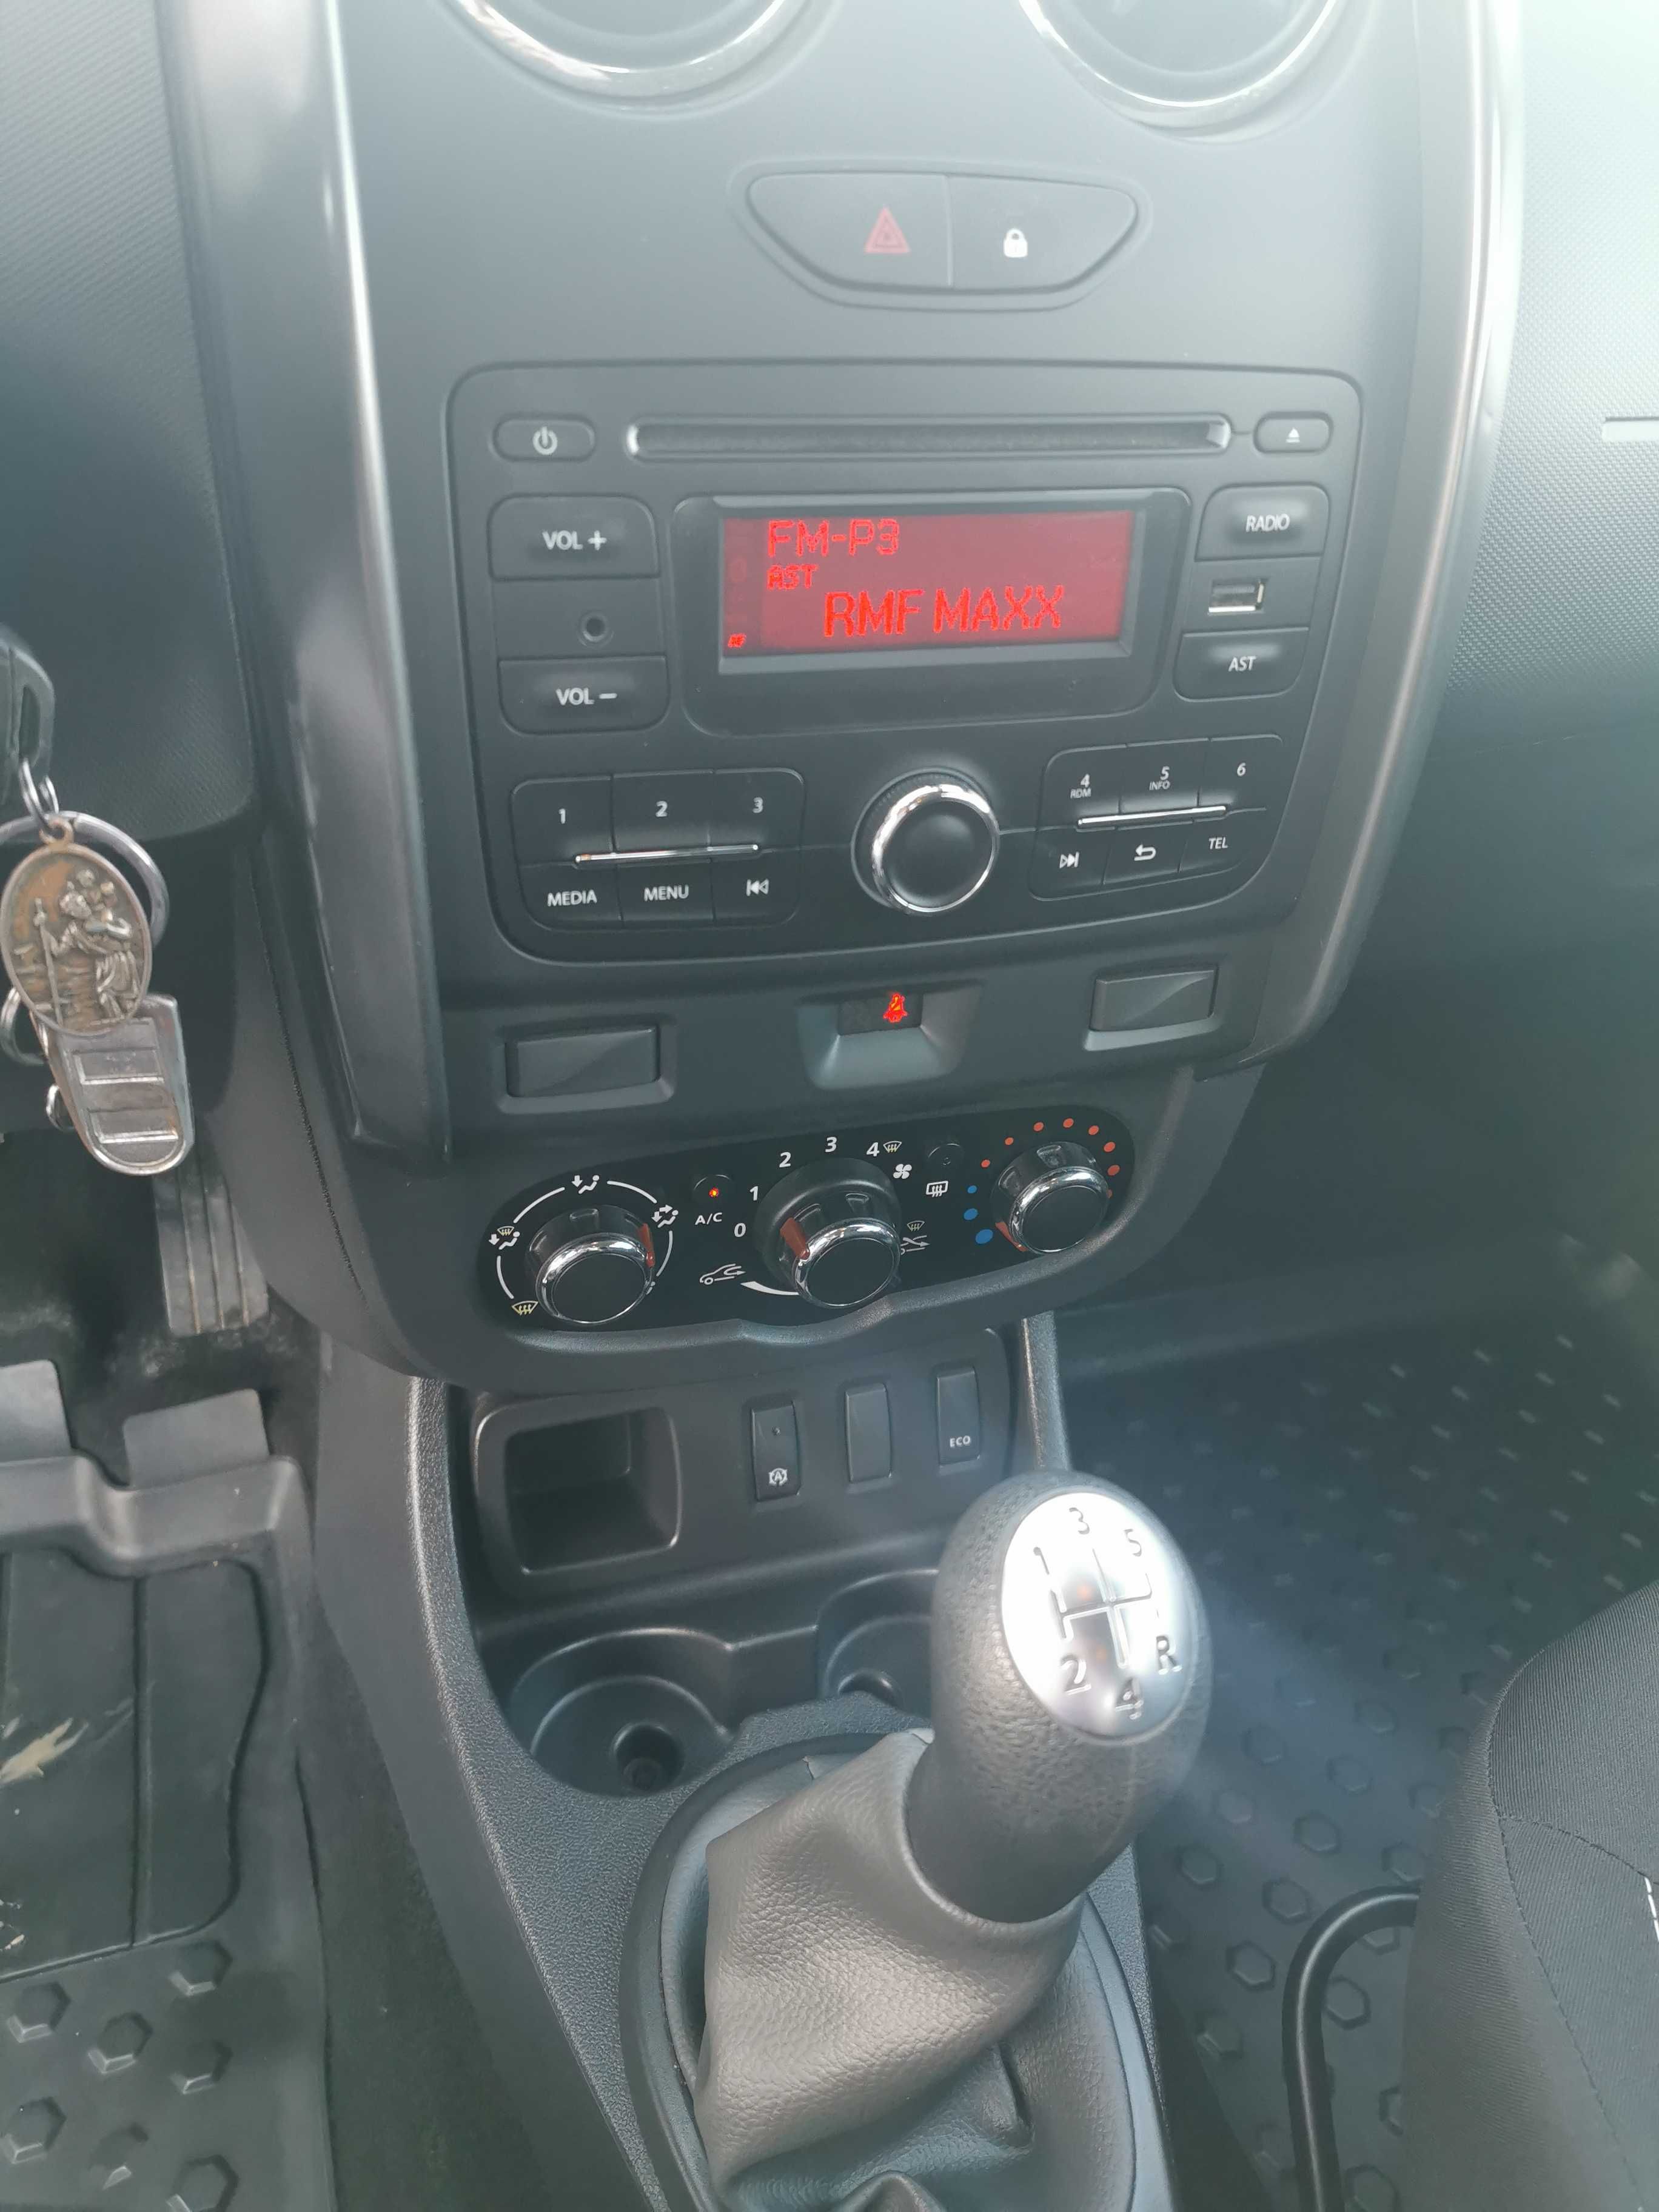 Dacia Duster 1,6 Benzyna, Salon PL/ FV 23%